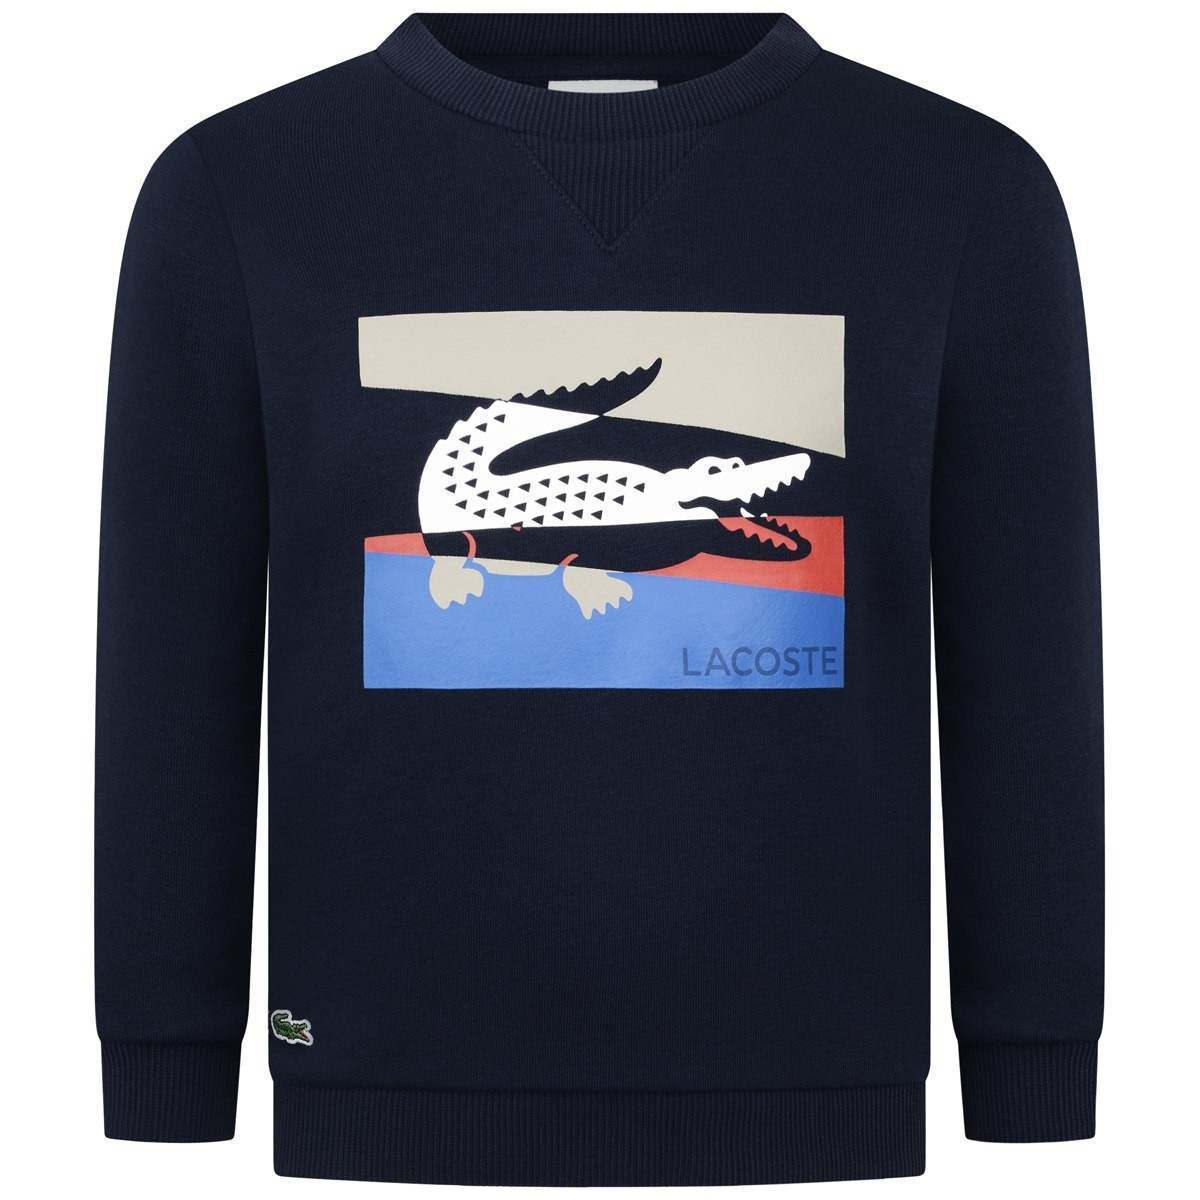 Crocodile Clothing Logo - Lacoste Boys Navy Crocodile Logo Sweatshirt